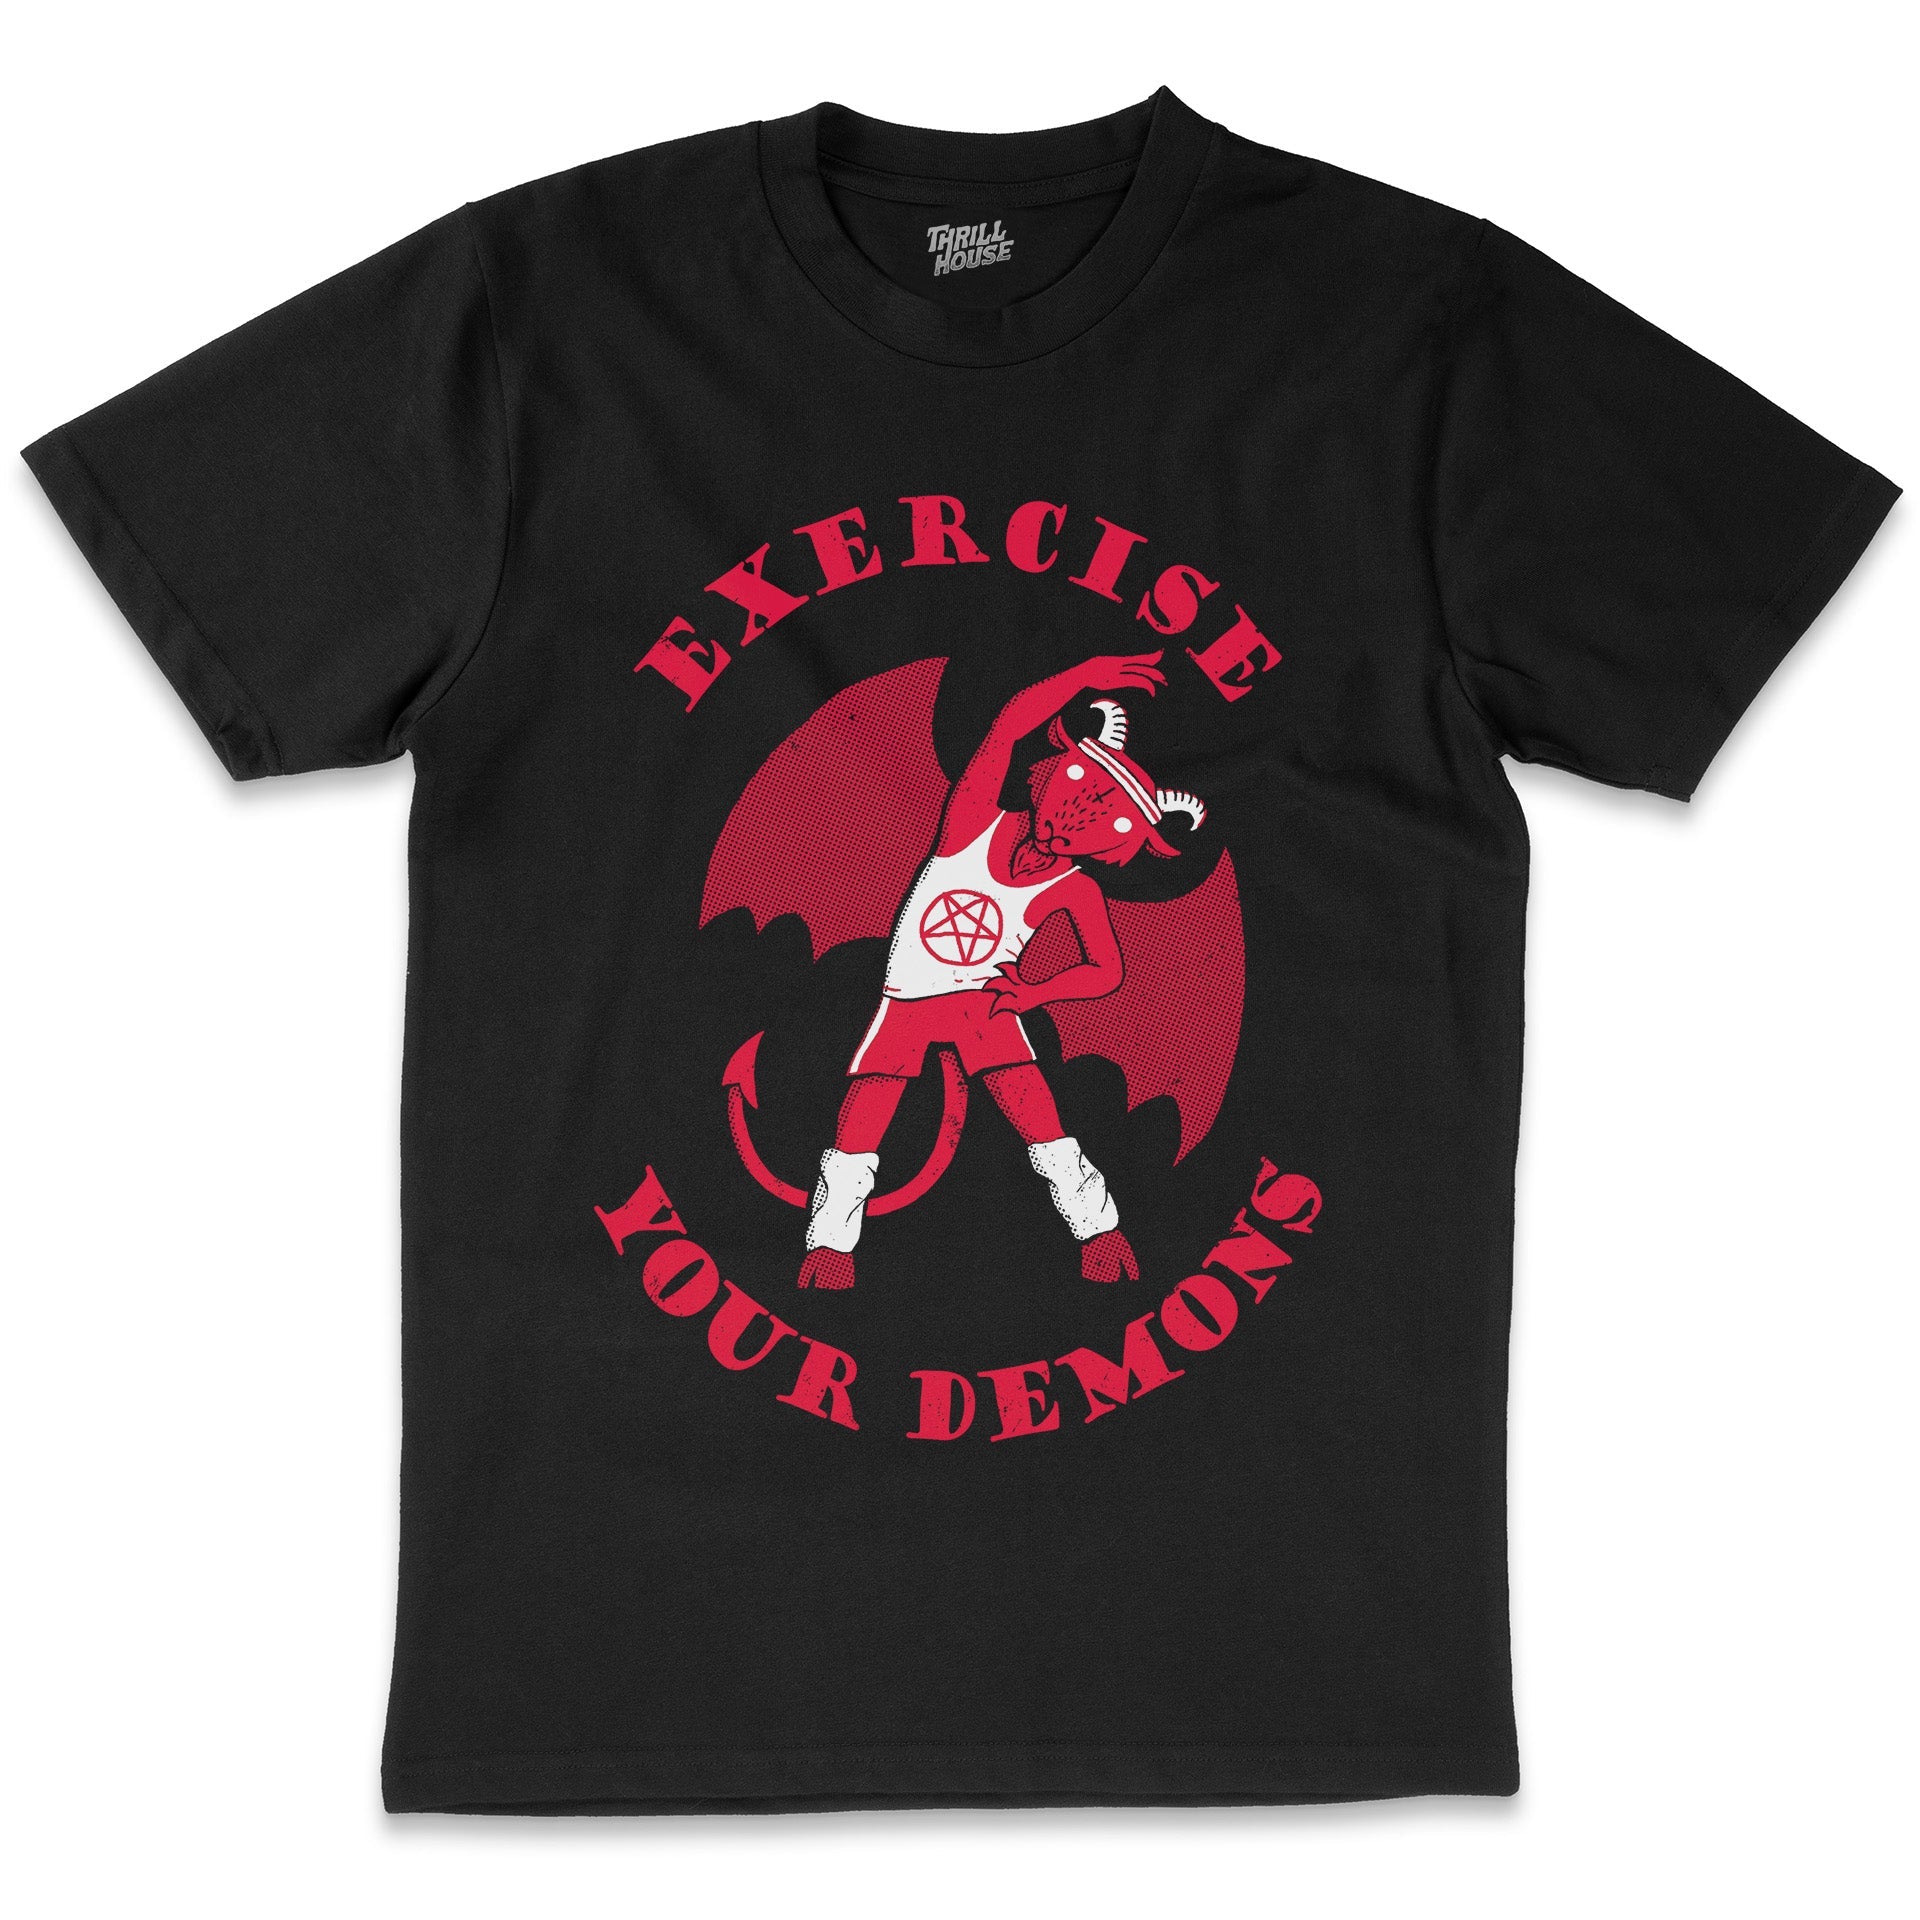 Exercise Your Demons Funny Pun Slogan Gym Training Sports Devil Demon Cotton T-Shirt